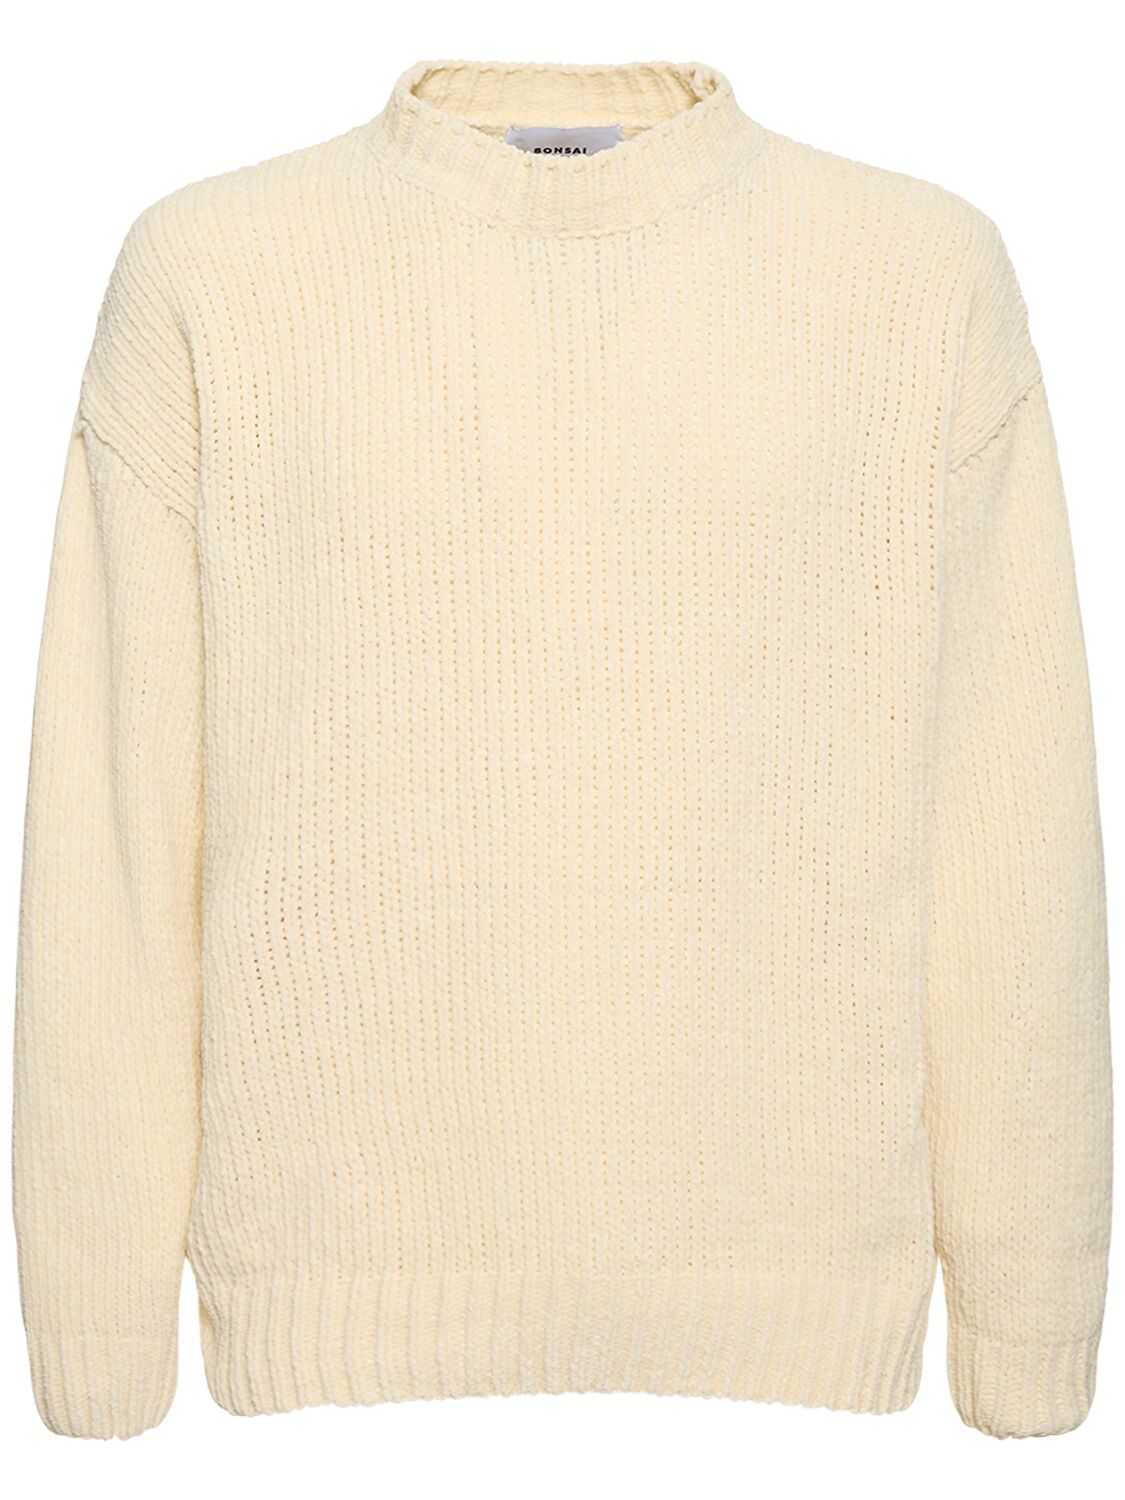 Bonsai Cotton Chenille Knit Crewneck Sweater In Ivory